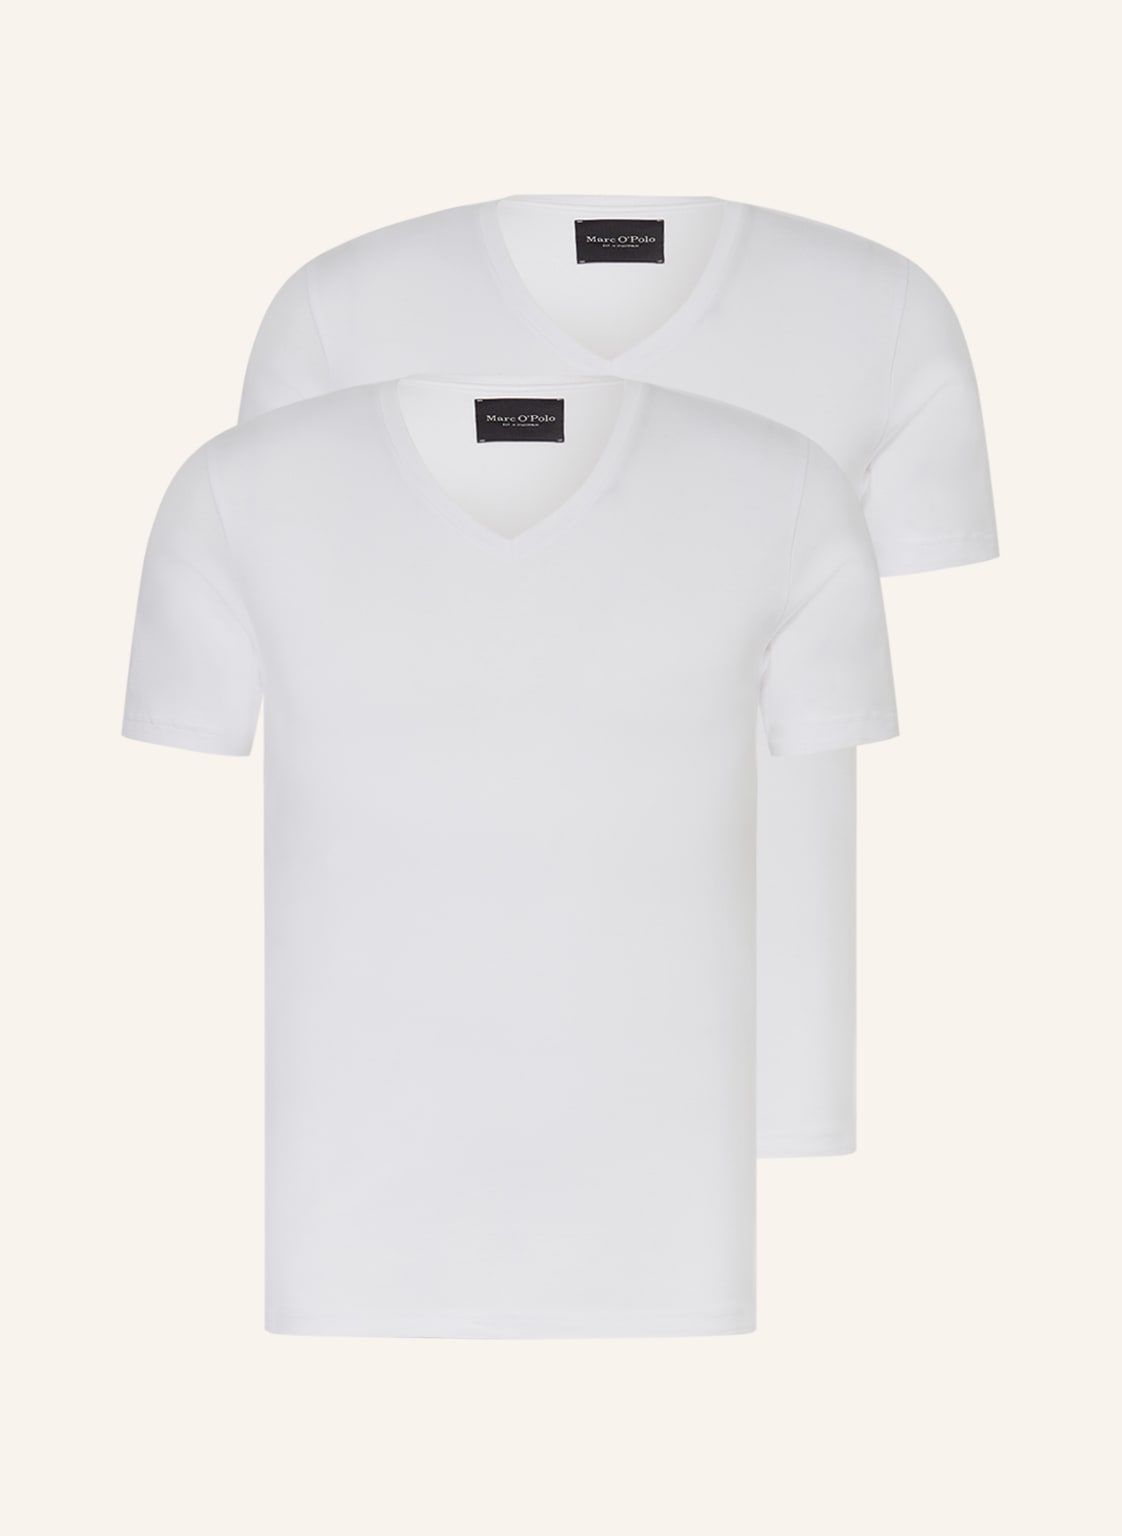 Image of Marc O'polo 2er-Pack V-Shirts Essentials weiss